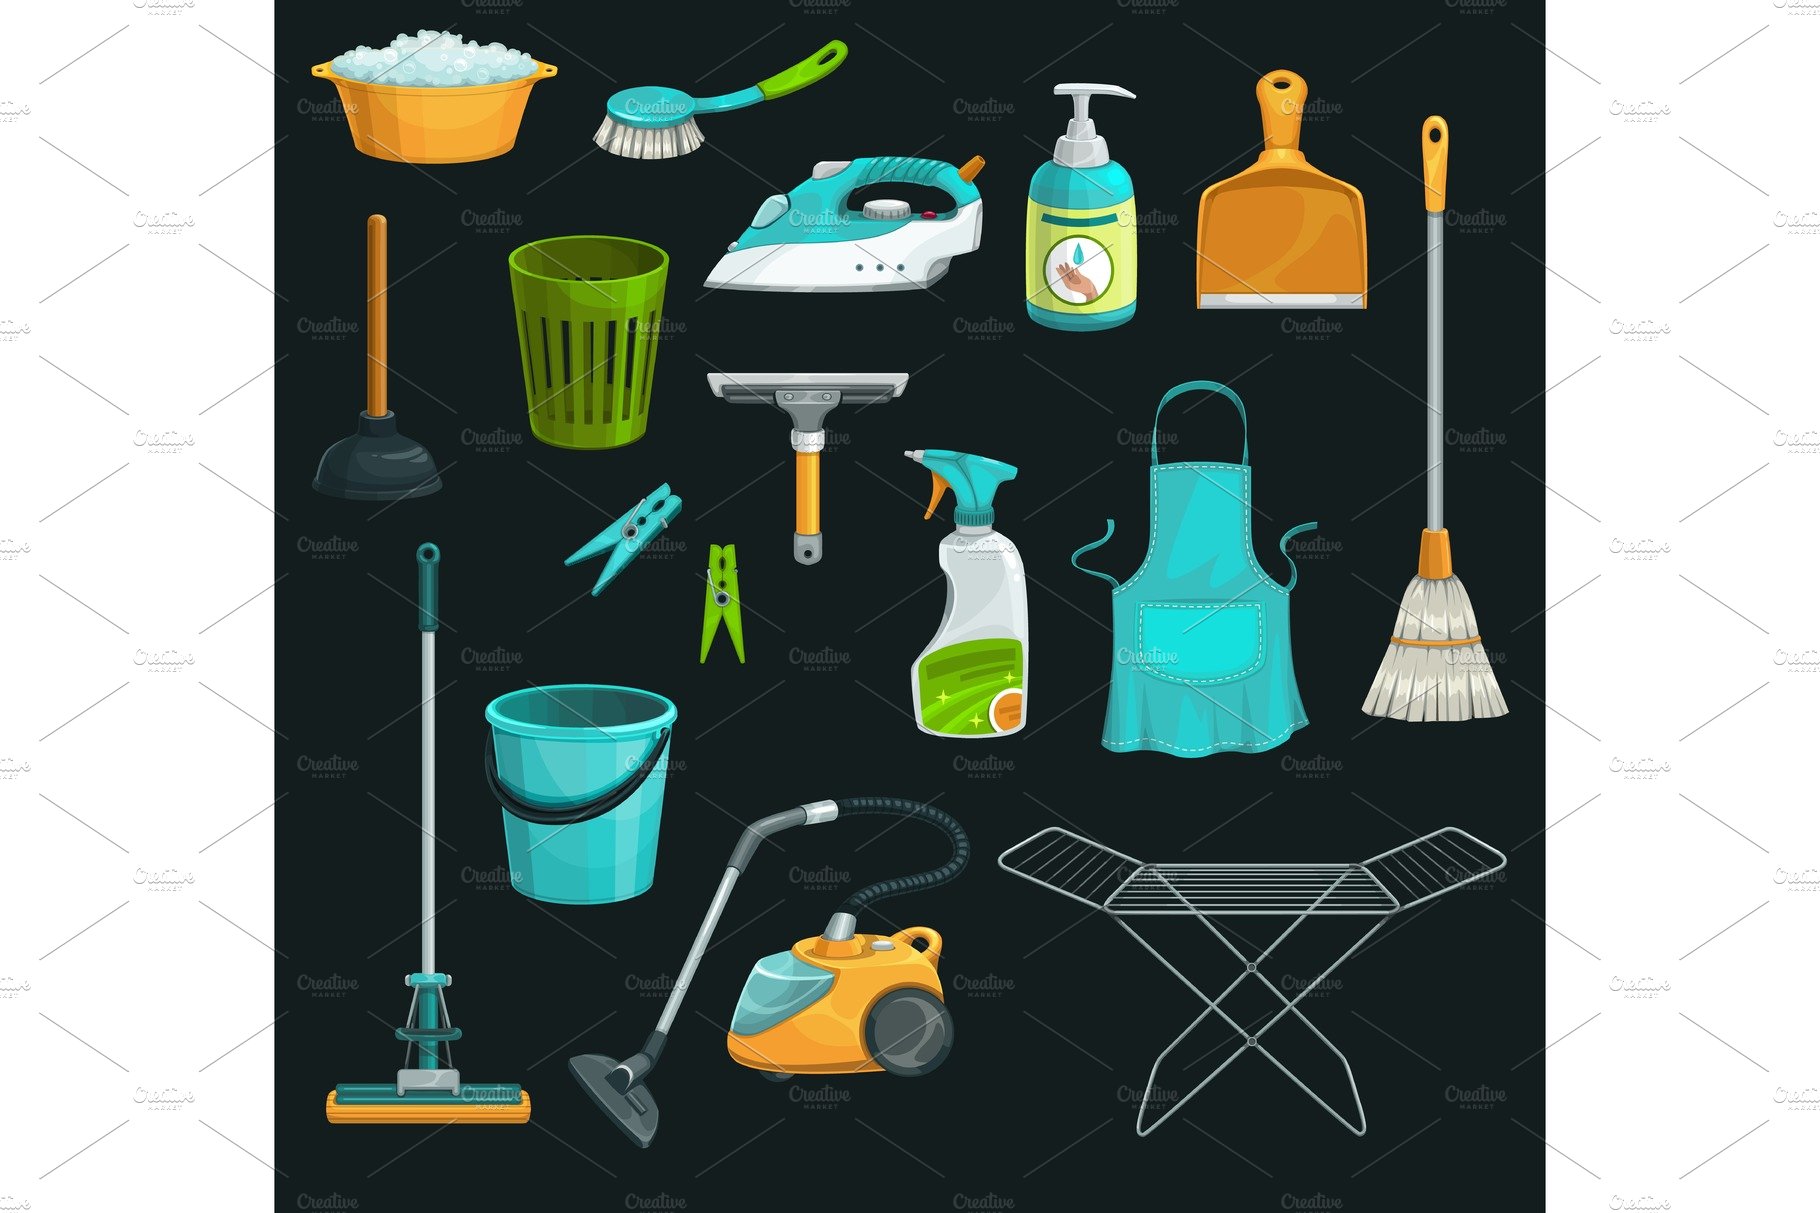 Bucket, soap, mop, broom cover image.